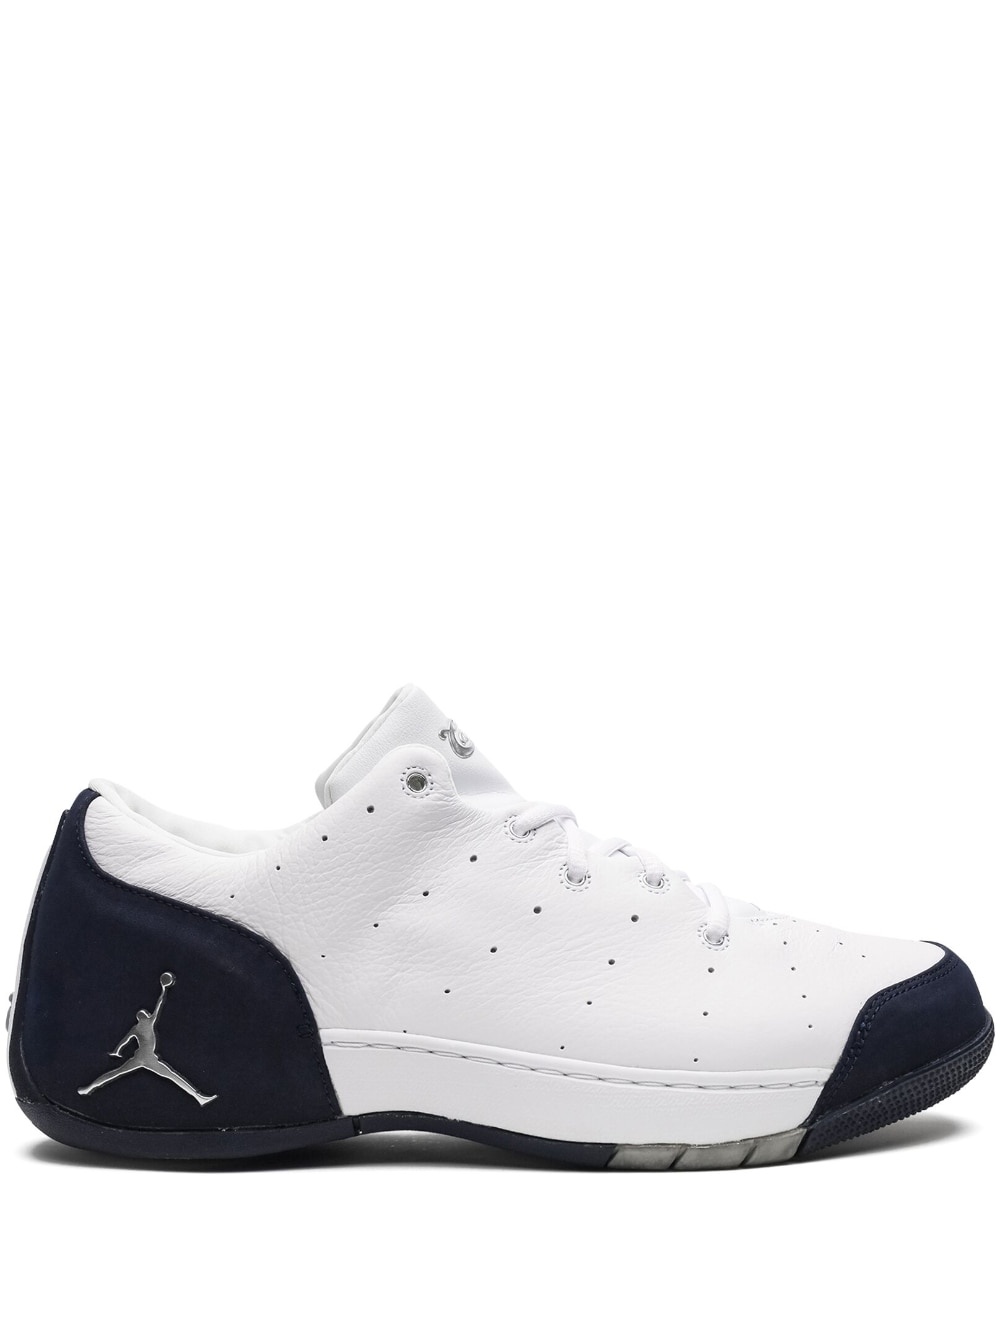 Jordan Carmelo 1.5 Low "White/Metallic Silver/Obsidian" sneakers - 1